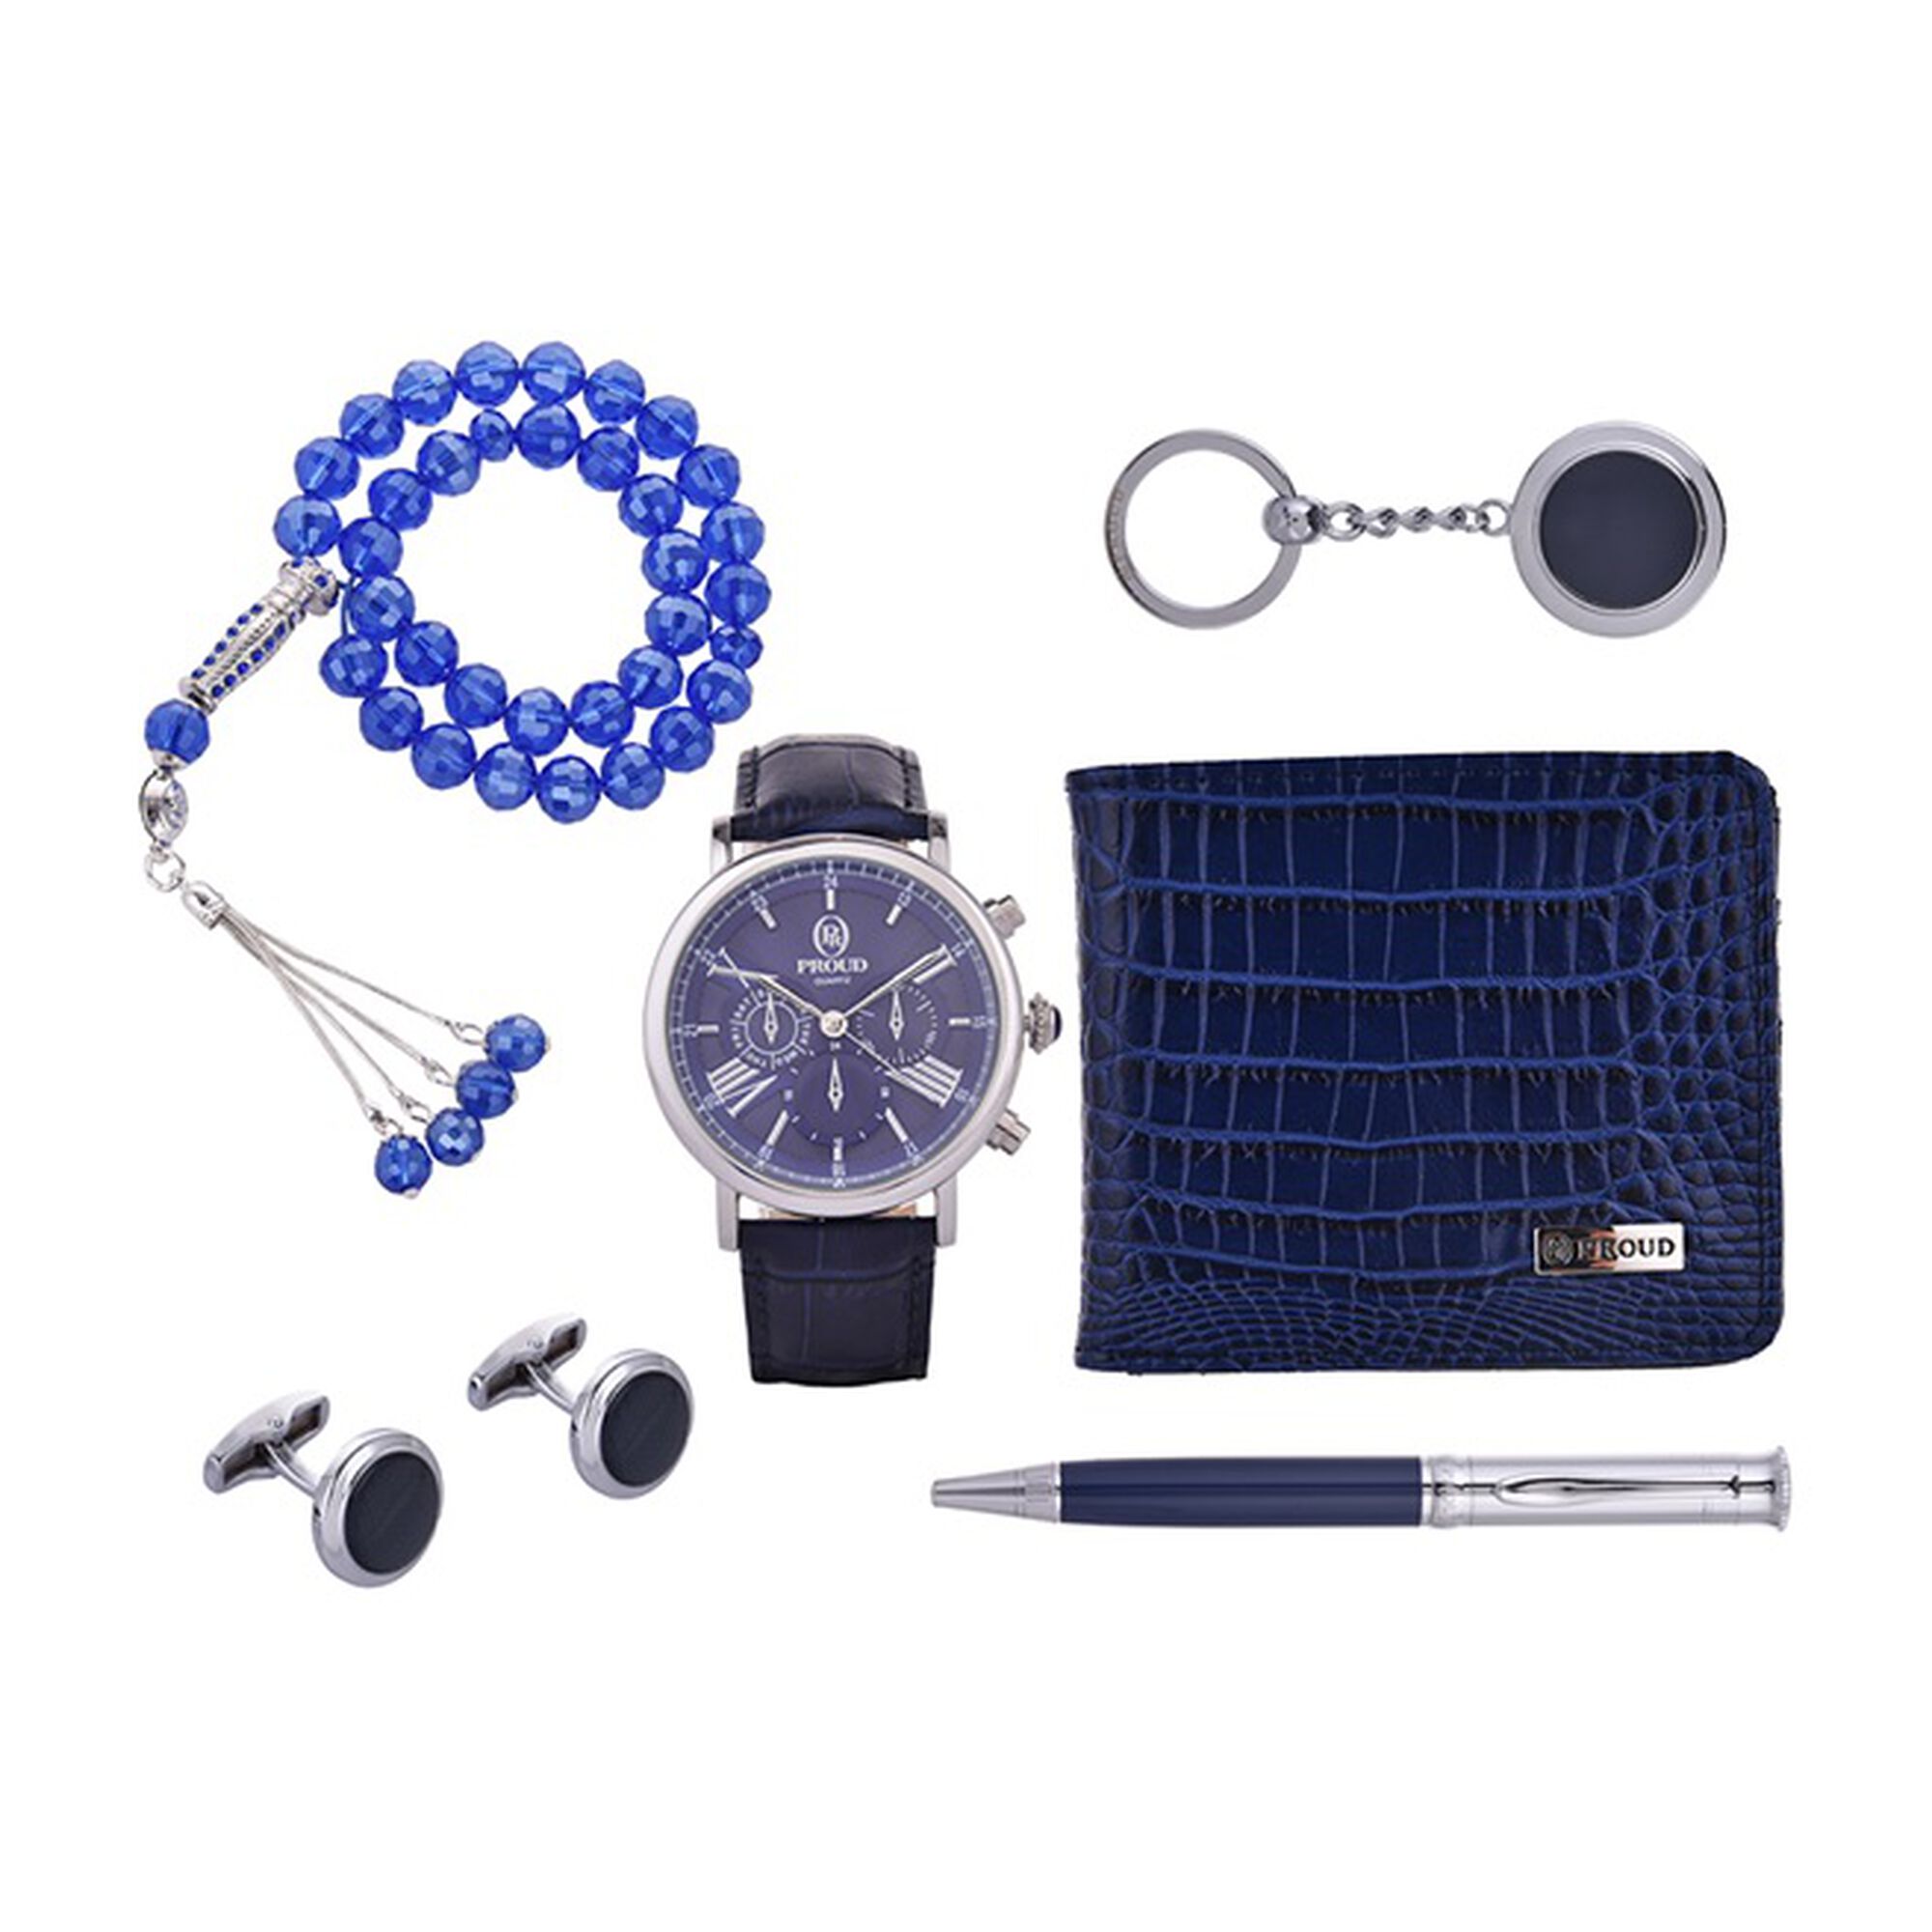 Proud accessories giftset bluesilver 6 pcs.